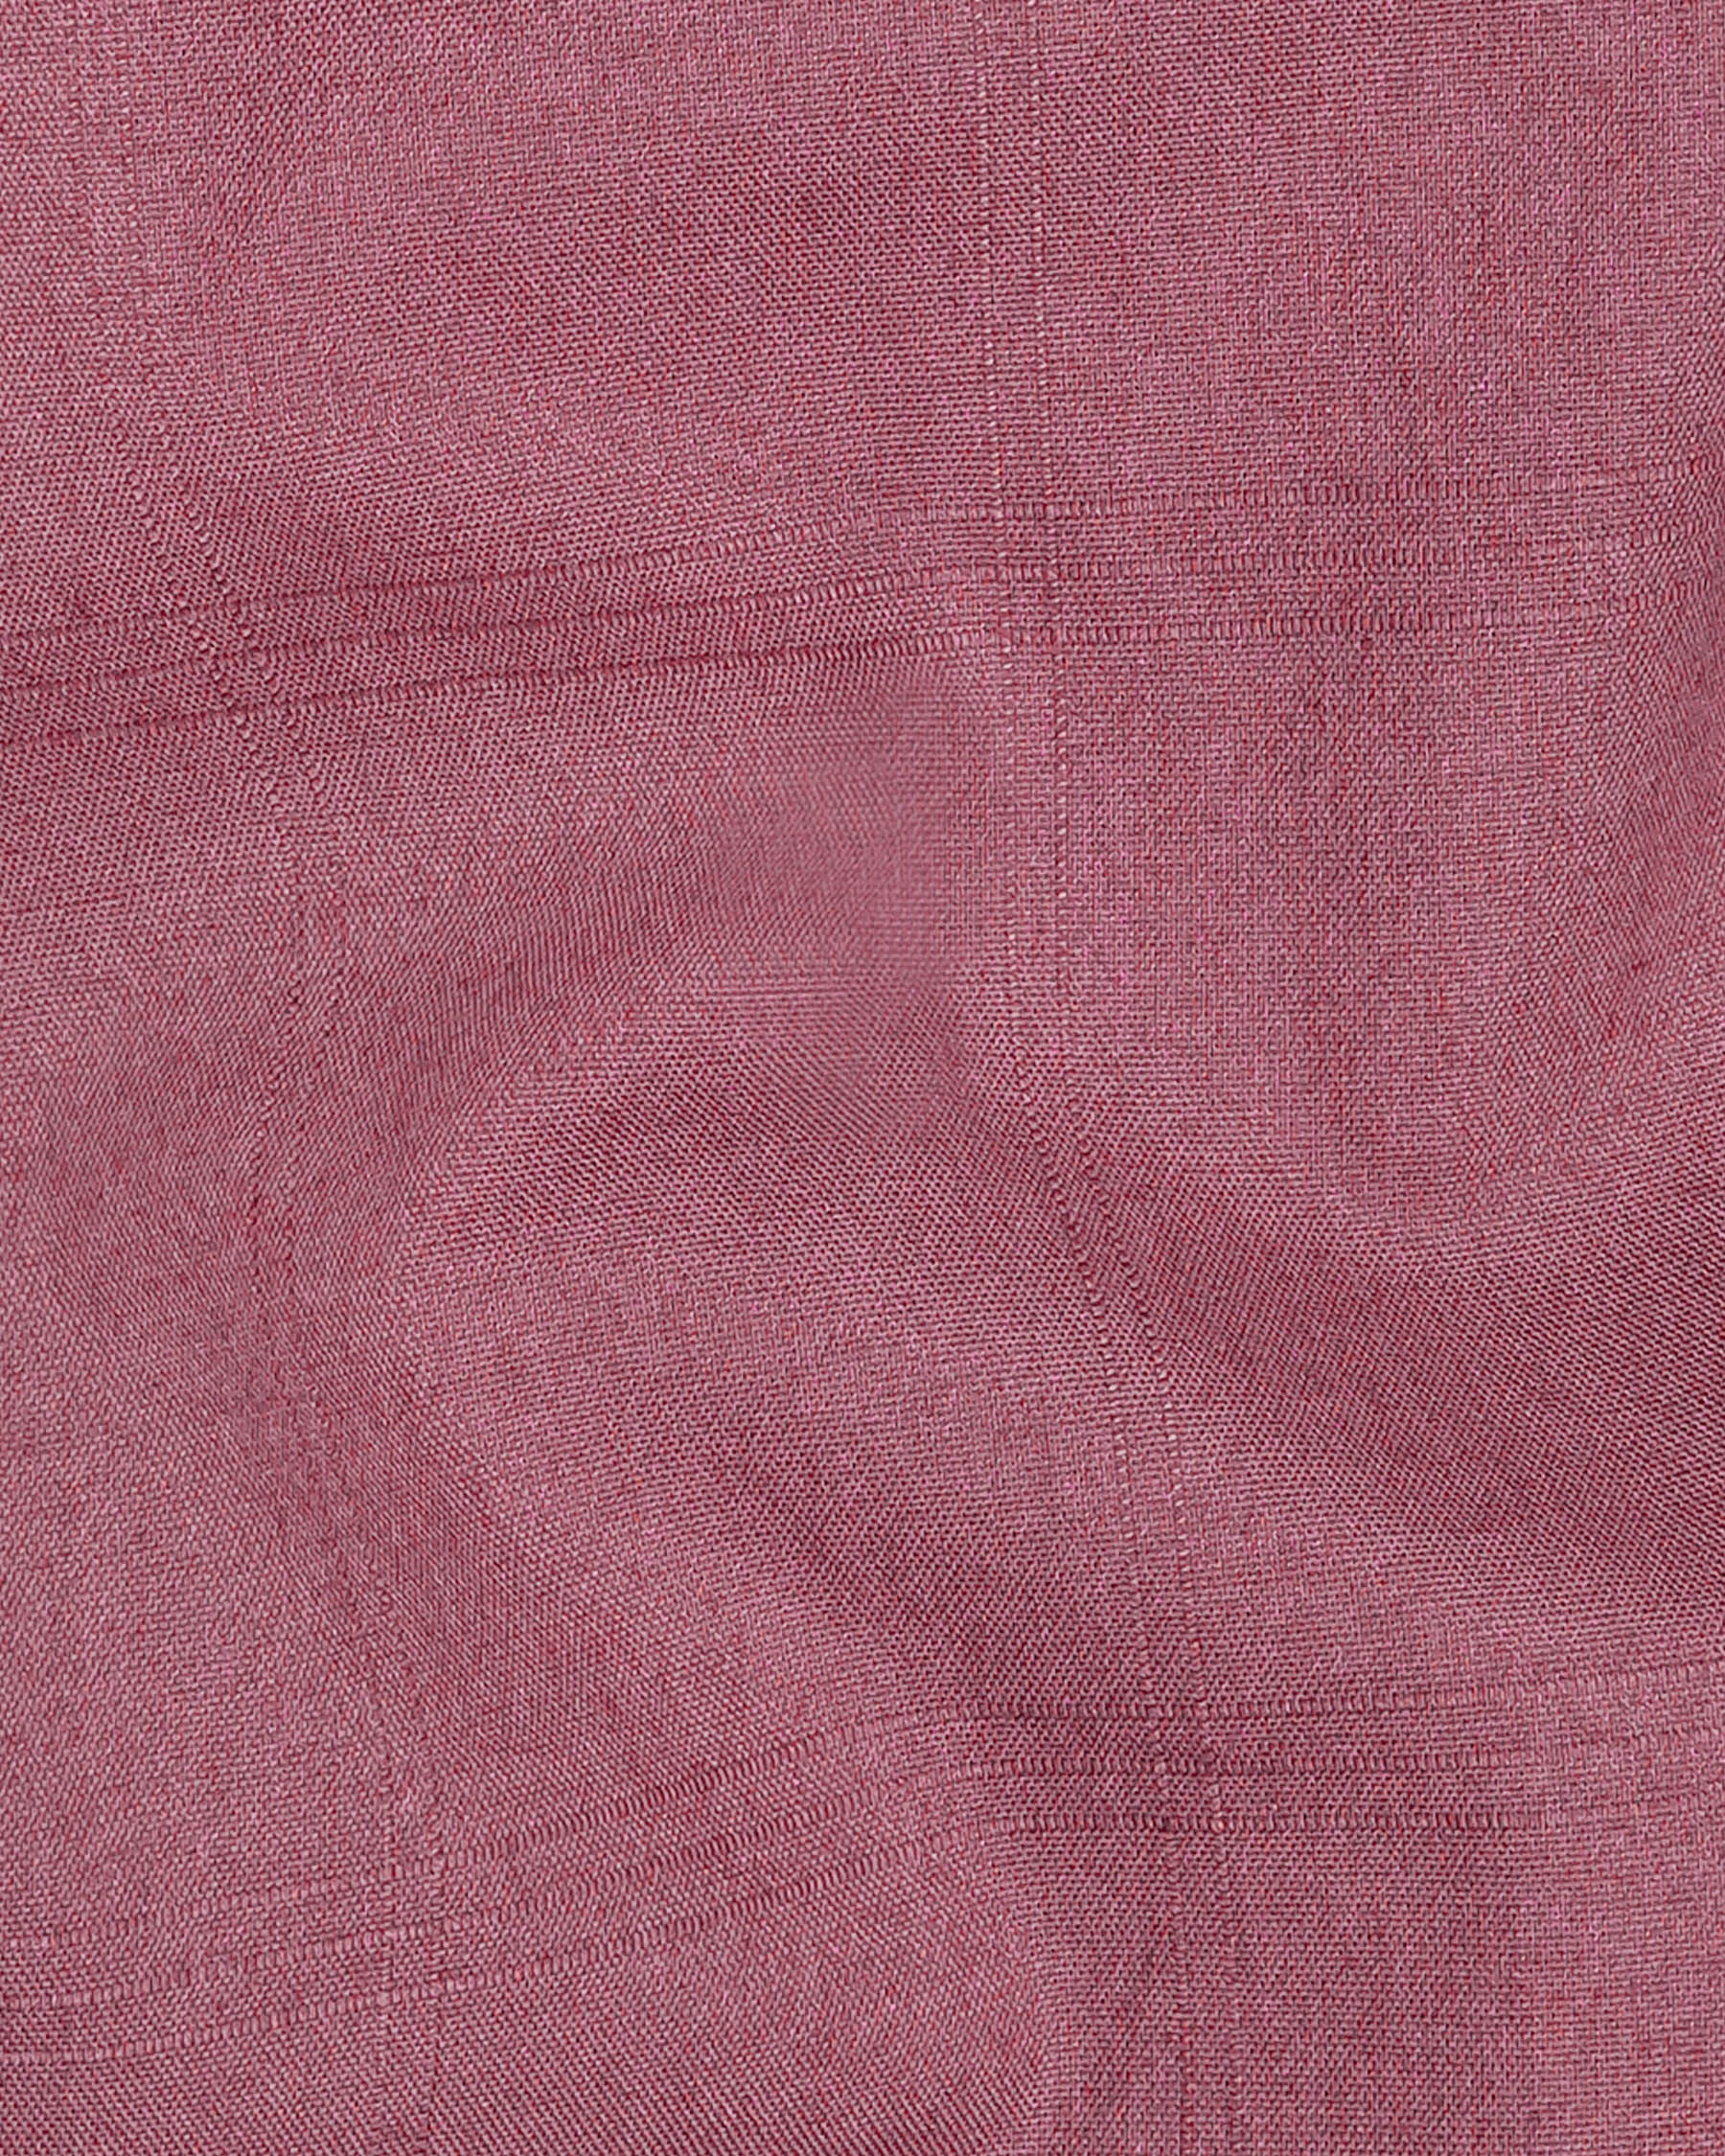 Tapestry Pink Subtle Striped Dobby Textured Premium Giza Cotton Shirt 7937-BLE-38,7937-BLE-H-38,7937-BLE-39,7937-BLE-H-39,7937-BLE-40,7937-BLE-H-40,7937-BLE-42,7937-BLE-H-42,7937-BLE-44,7937-BLE-H-44,7937-BLE-46,7937-BLE-H-46,7937-BLE-48,7937-BLE-H-48,7937-BLE-50,7937-BLE-H-50,7937-BLE-52,7937-BLE-H-52